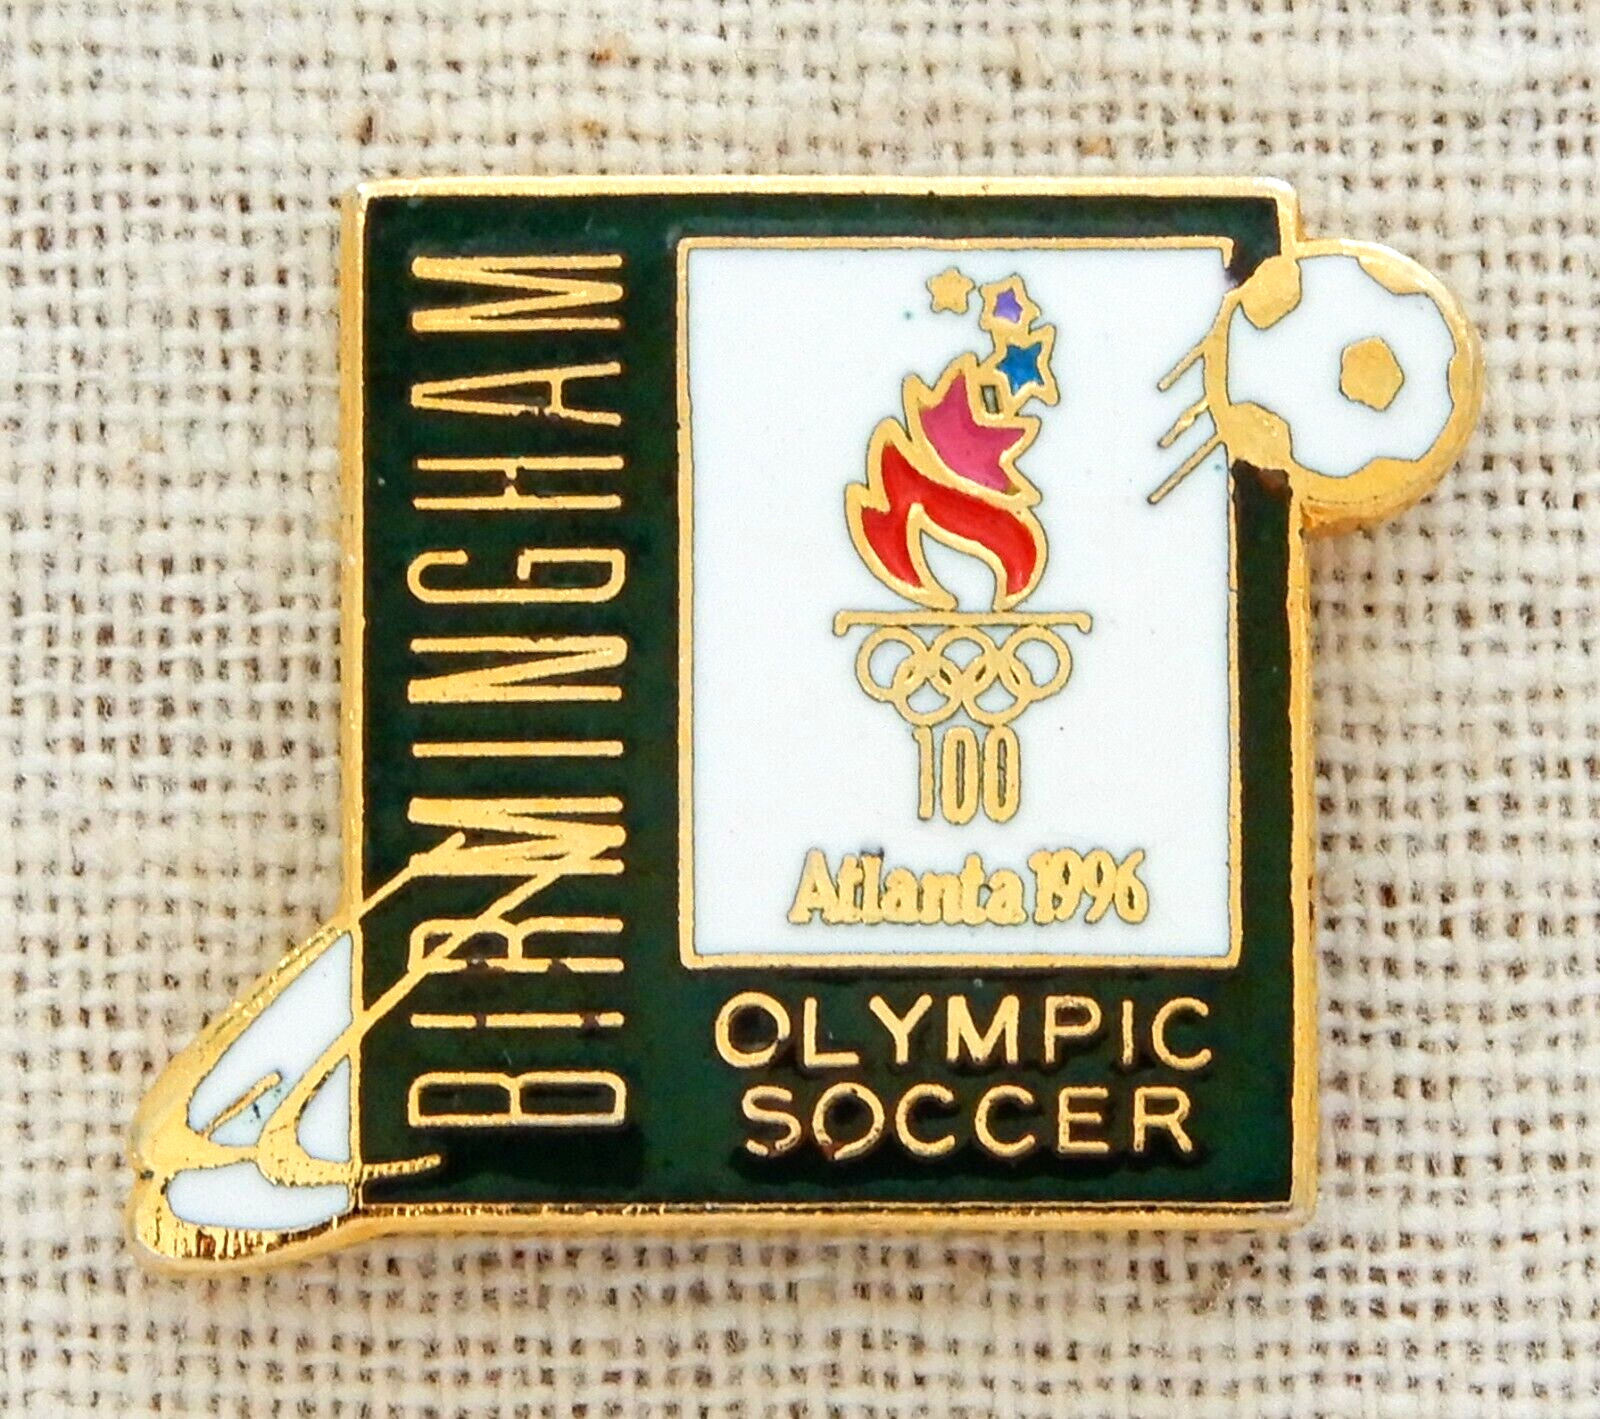 Birmingham Olympic Soccer Lapel Pin Vintage 100 Atlanta 1996 Sport Enamel